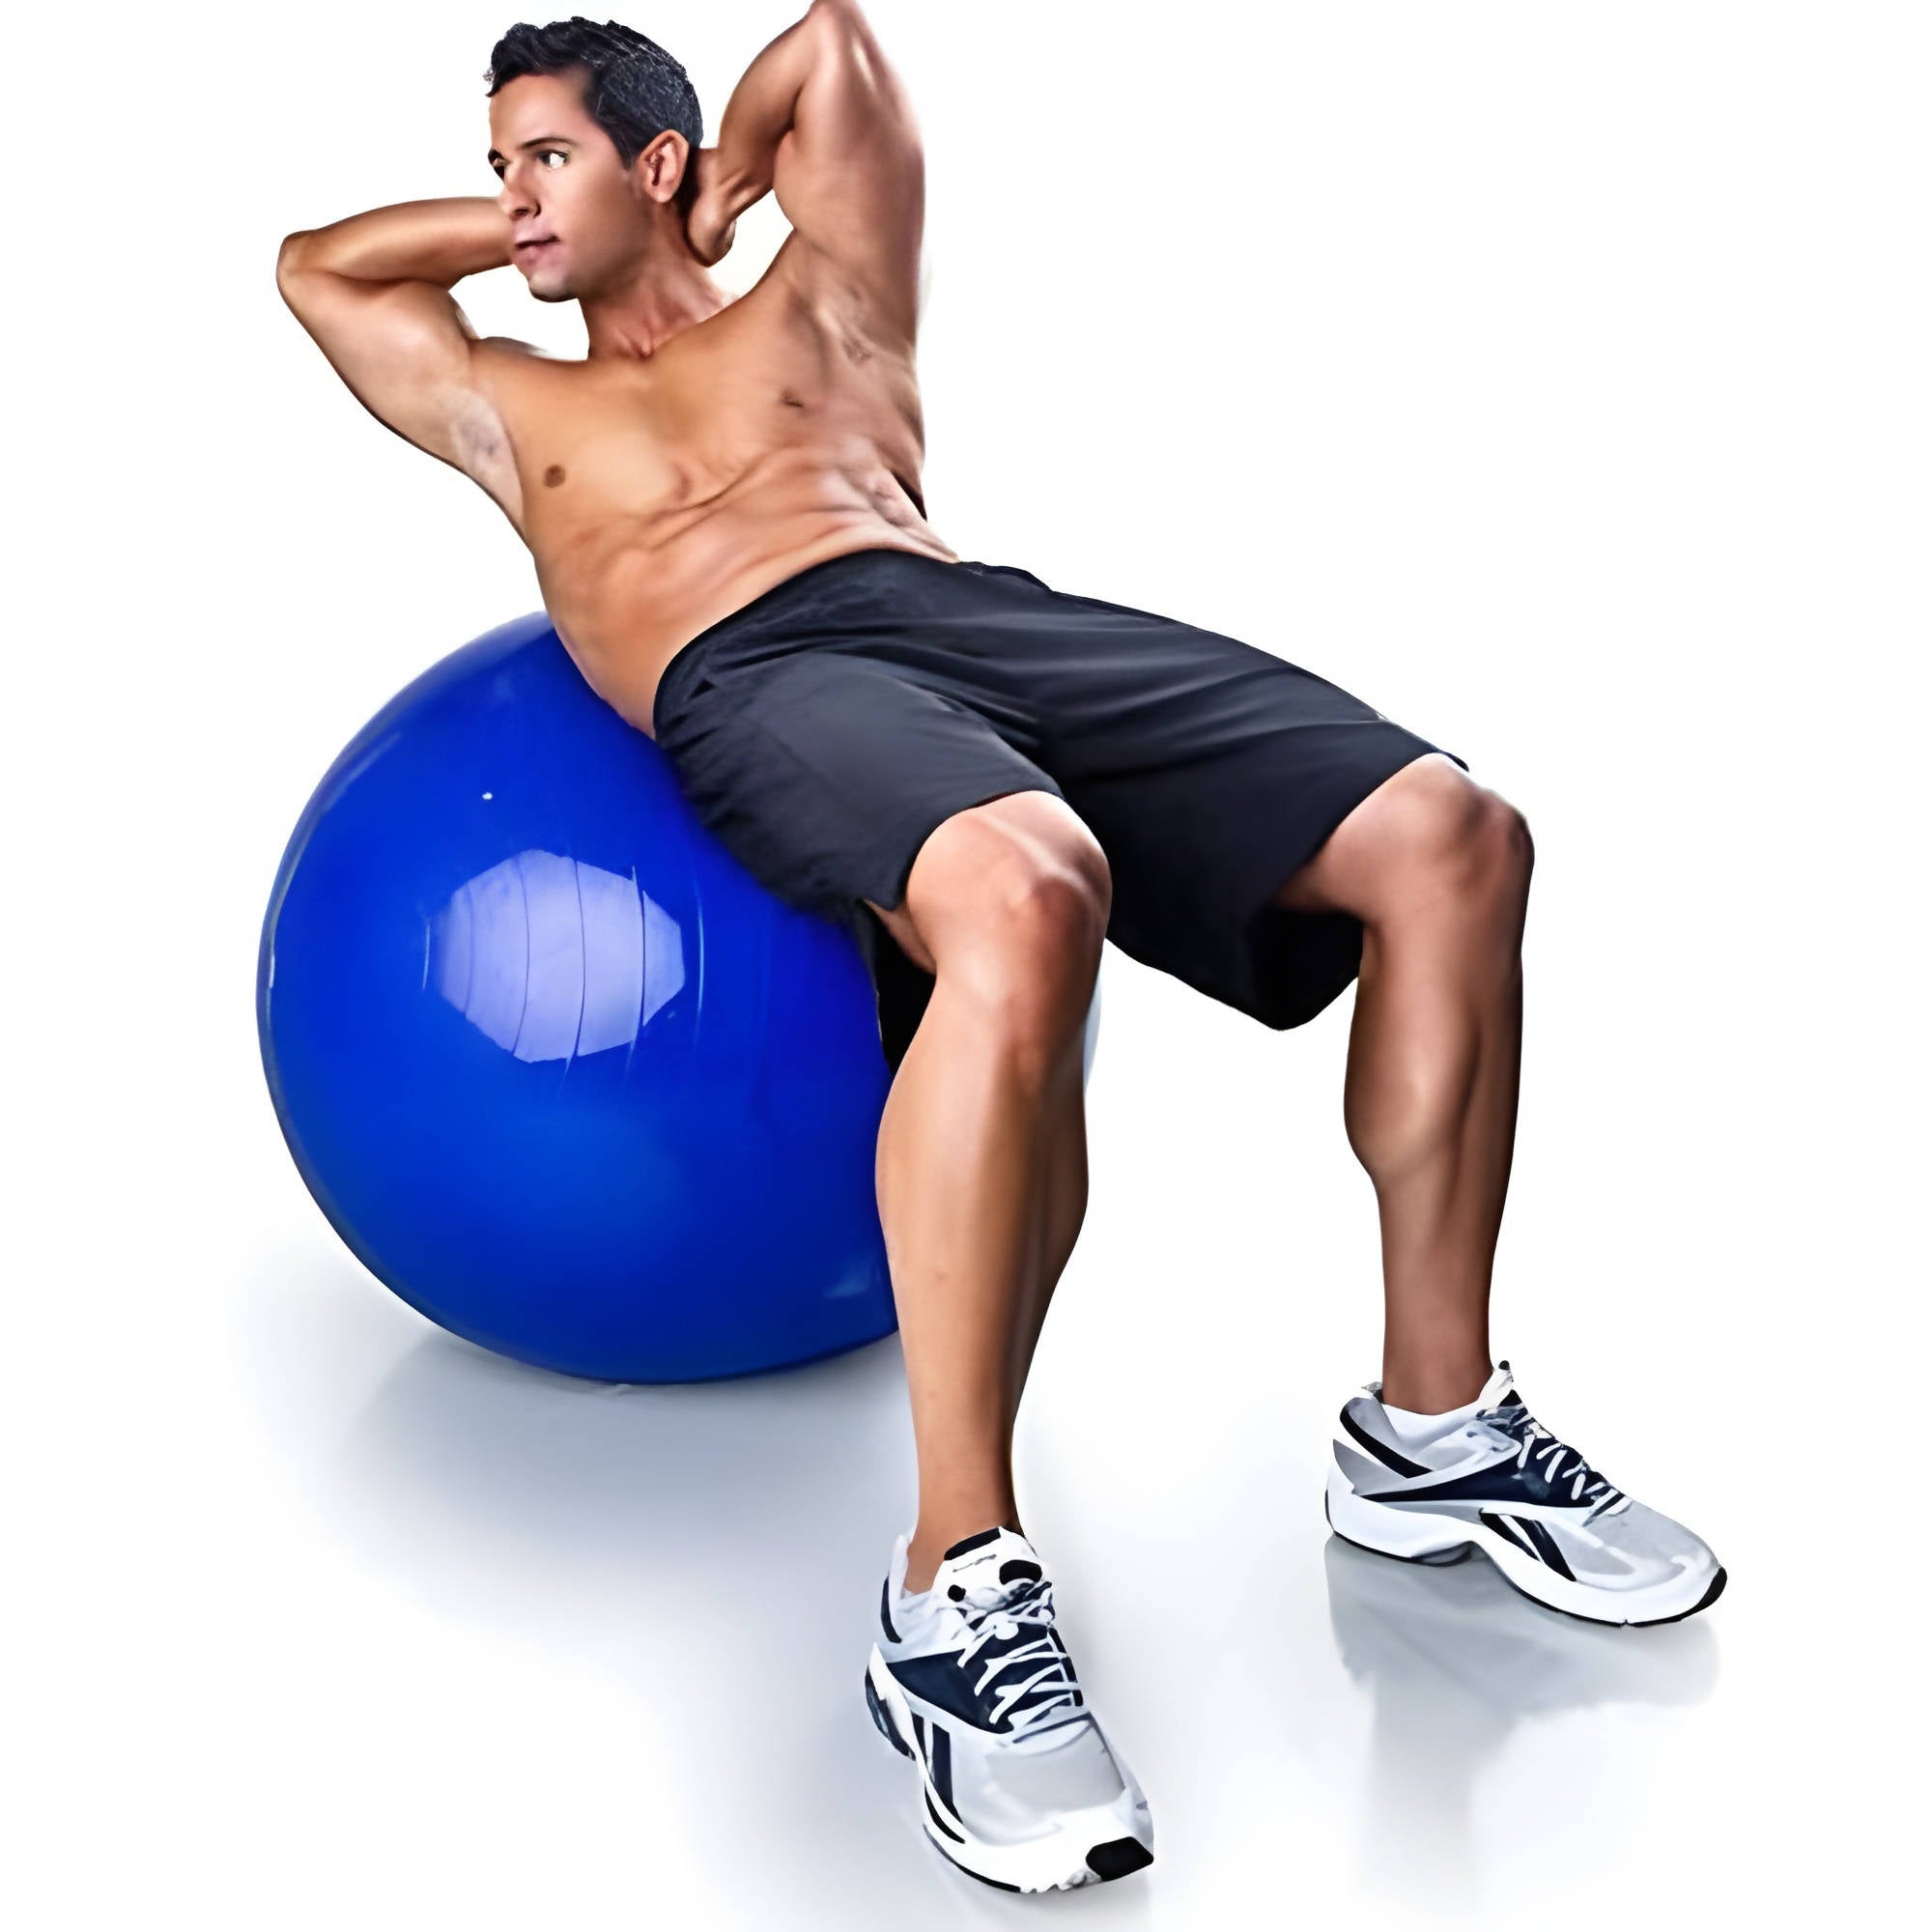 Gym Ball Exercise ball Size 65cm Multicolor